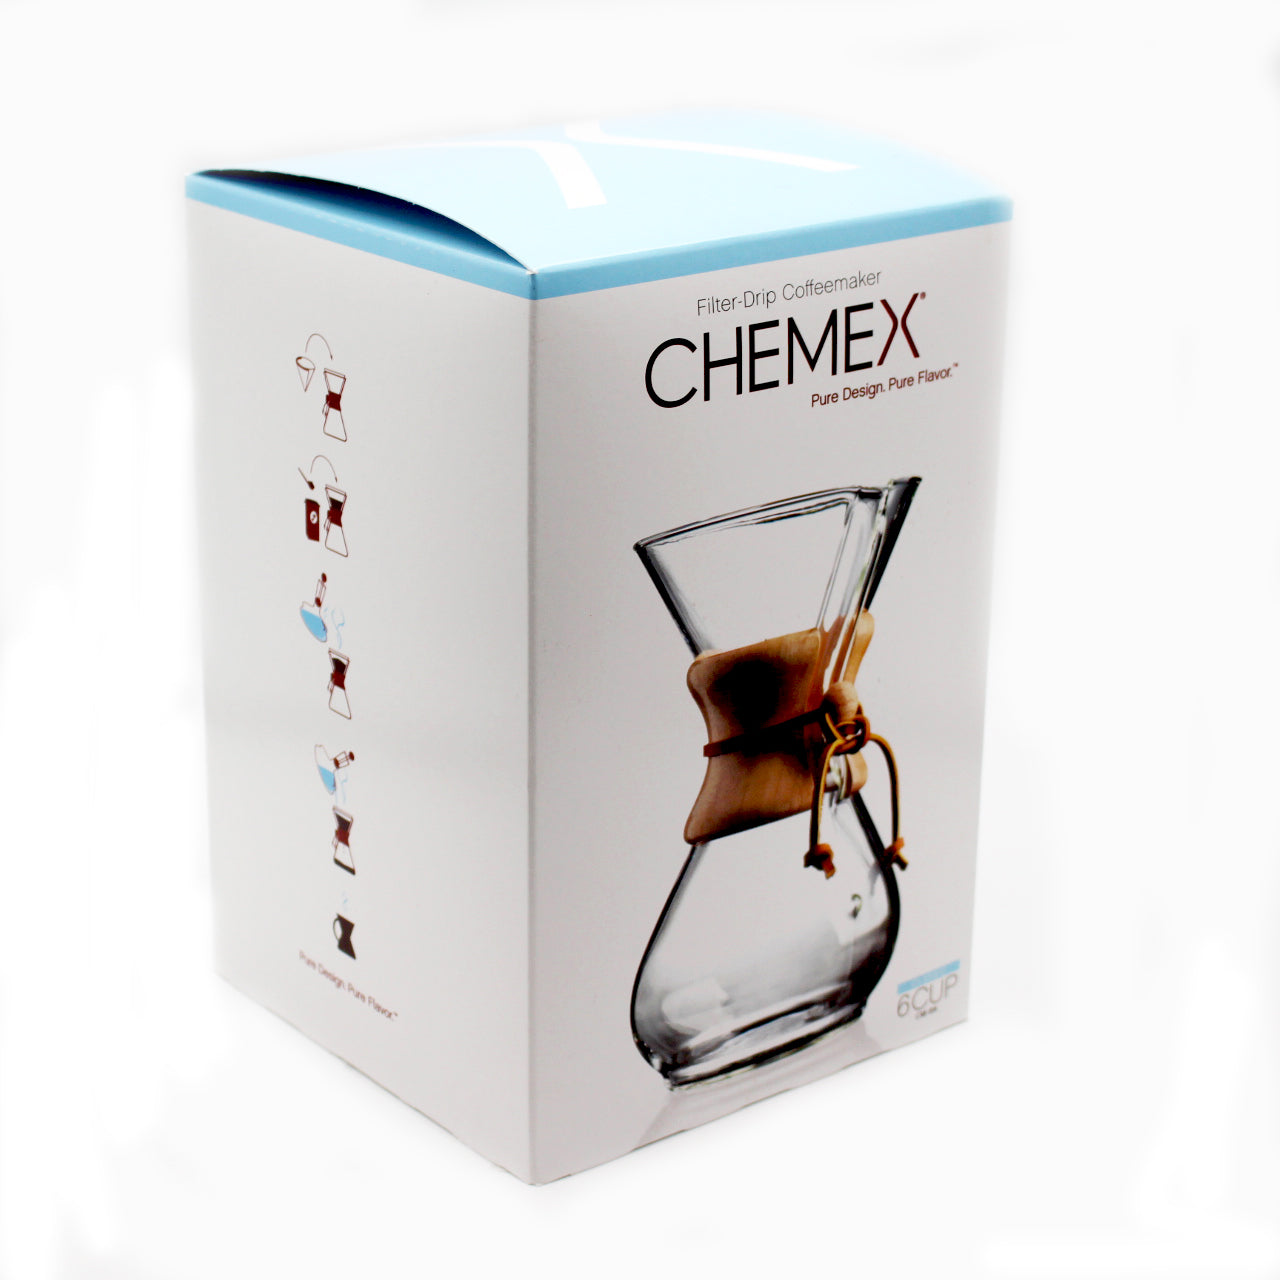 6-Cup Chemex